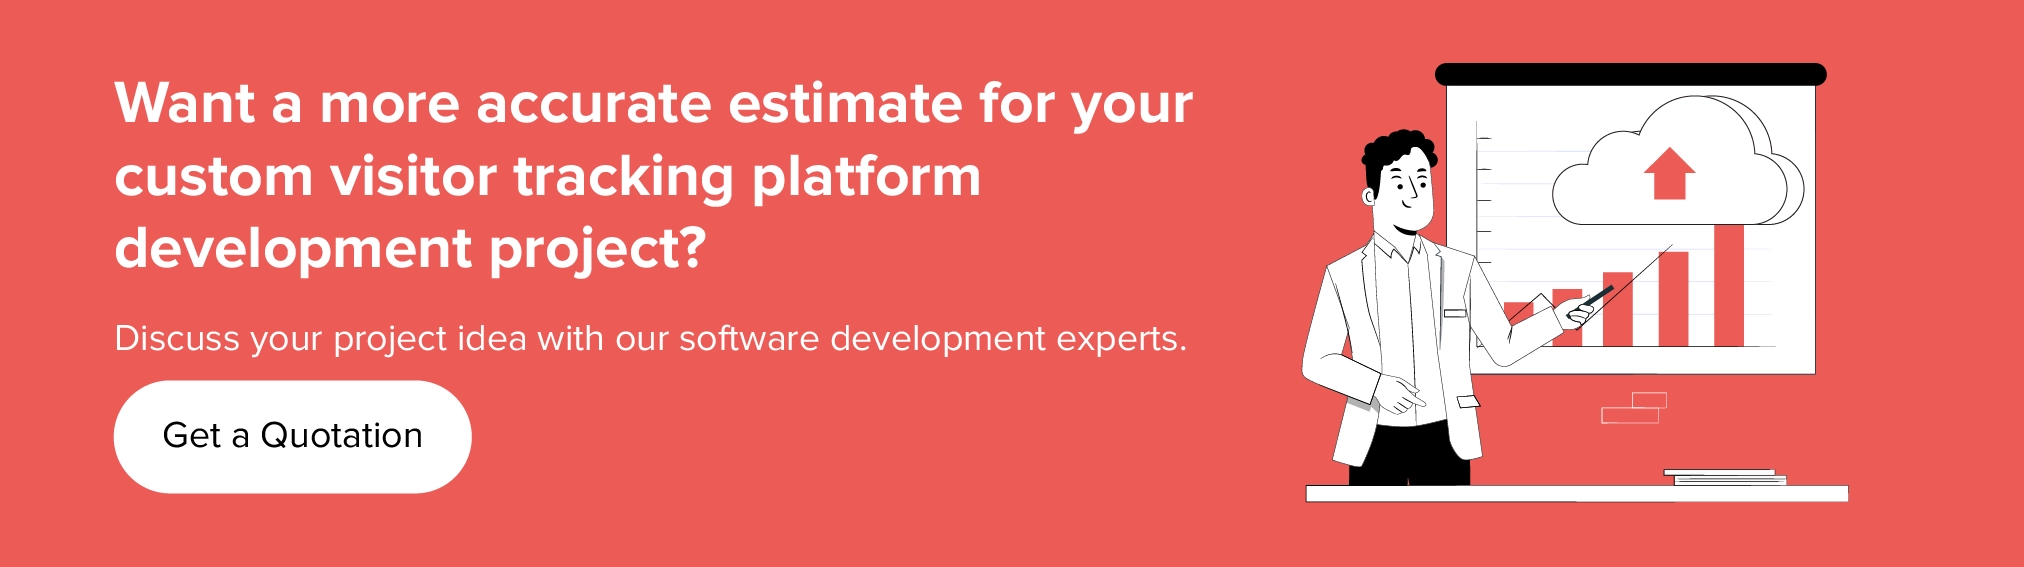 Tracking platform development